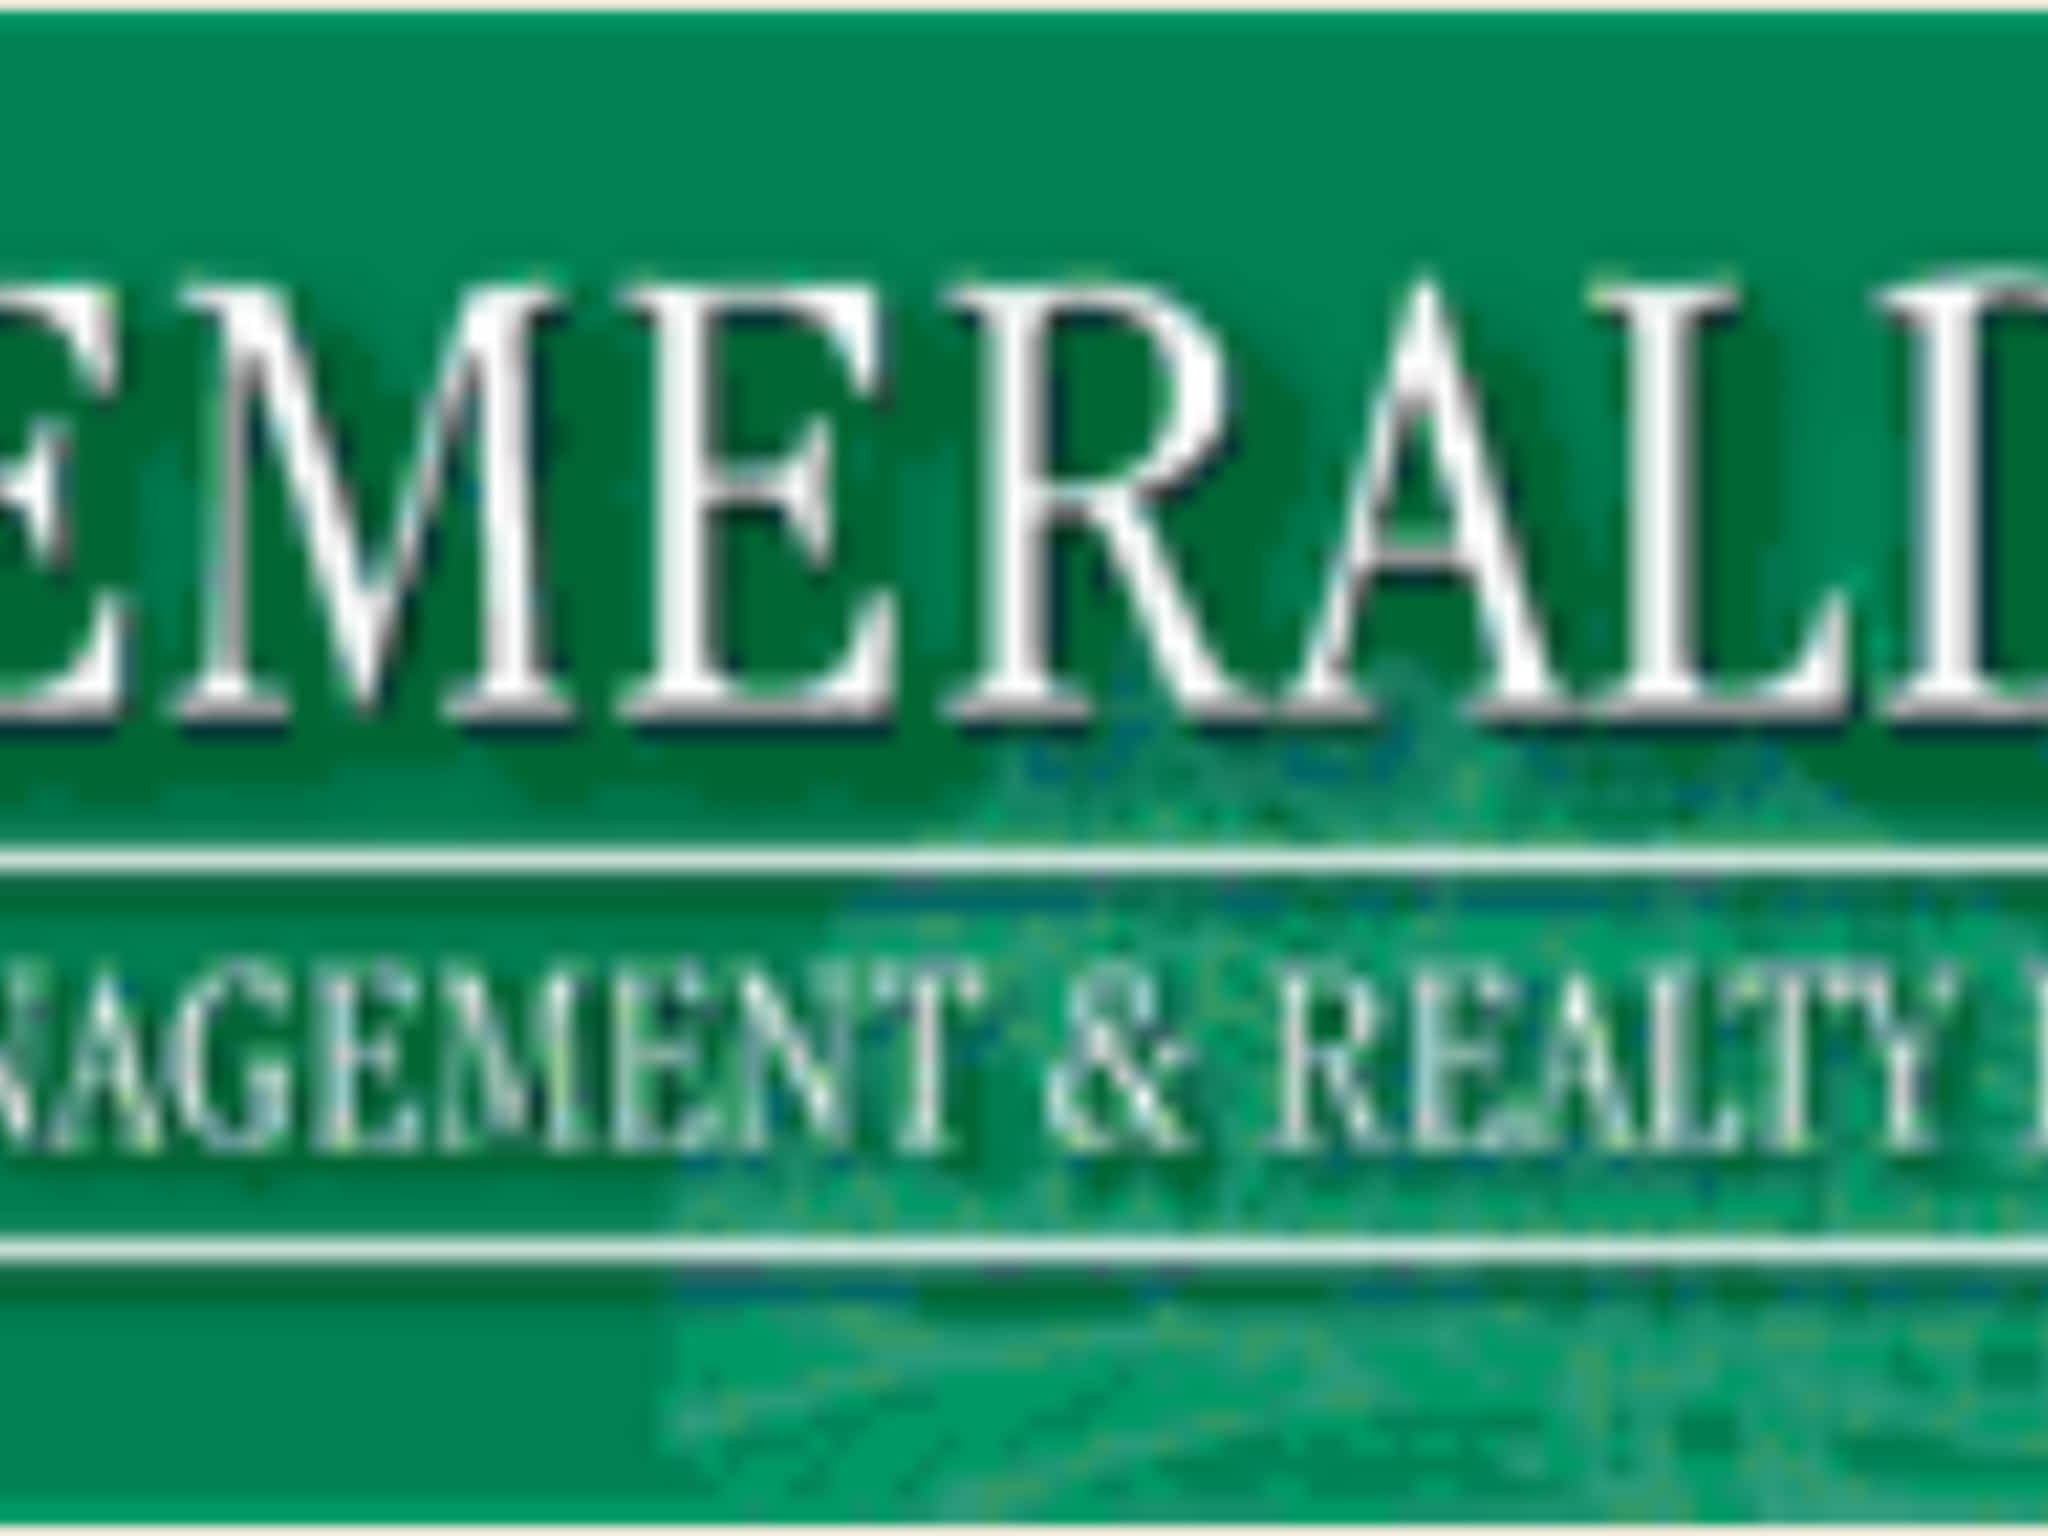 photo Emerald Management & Realty Ltd